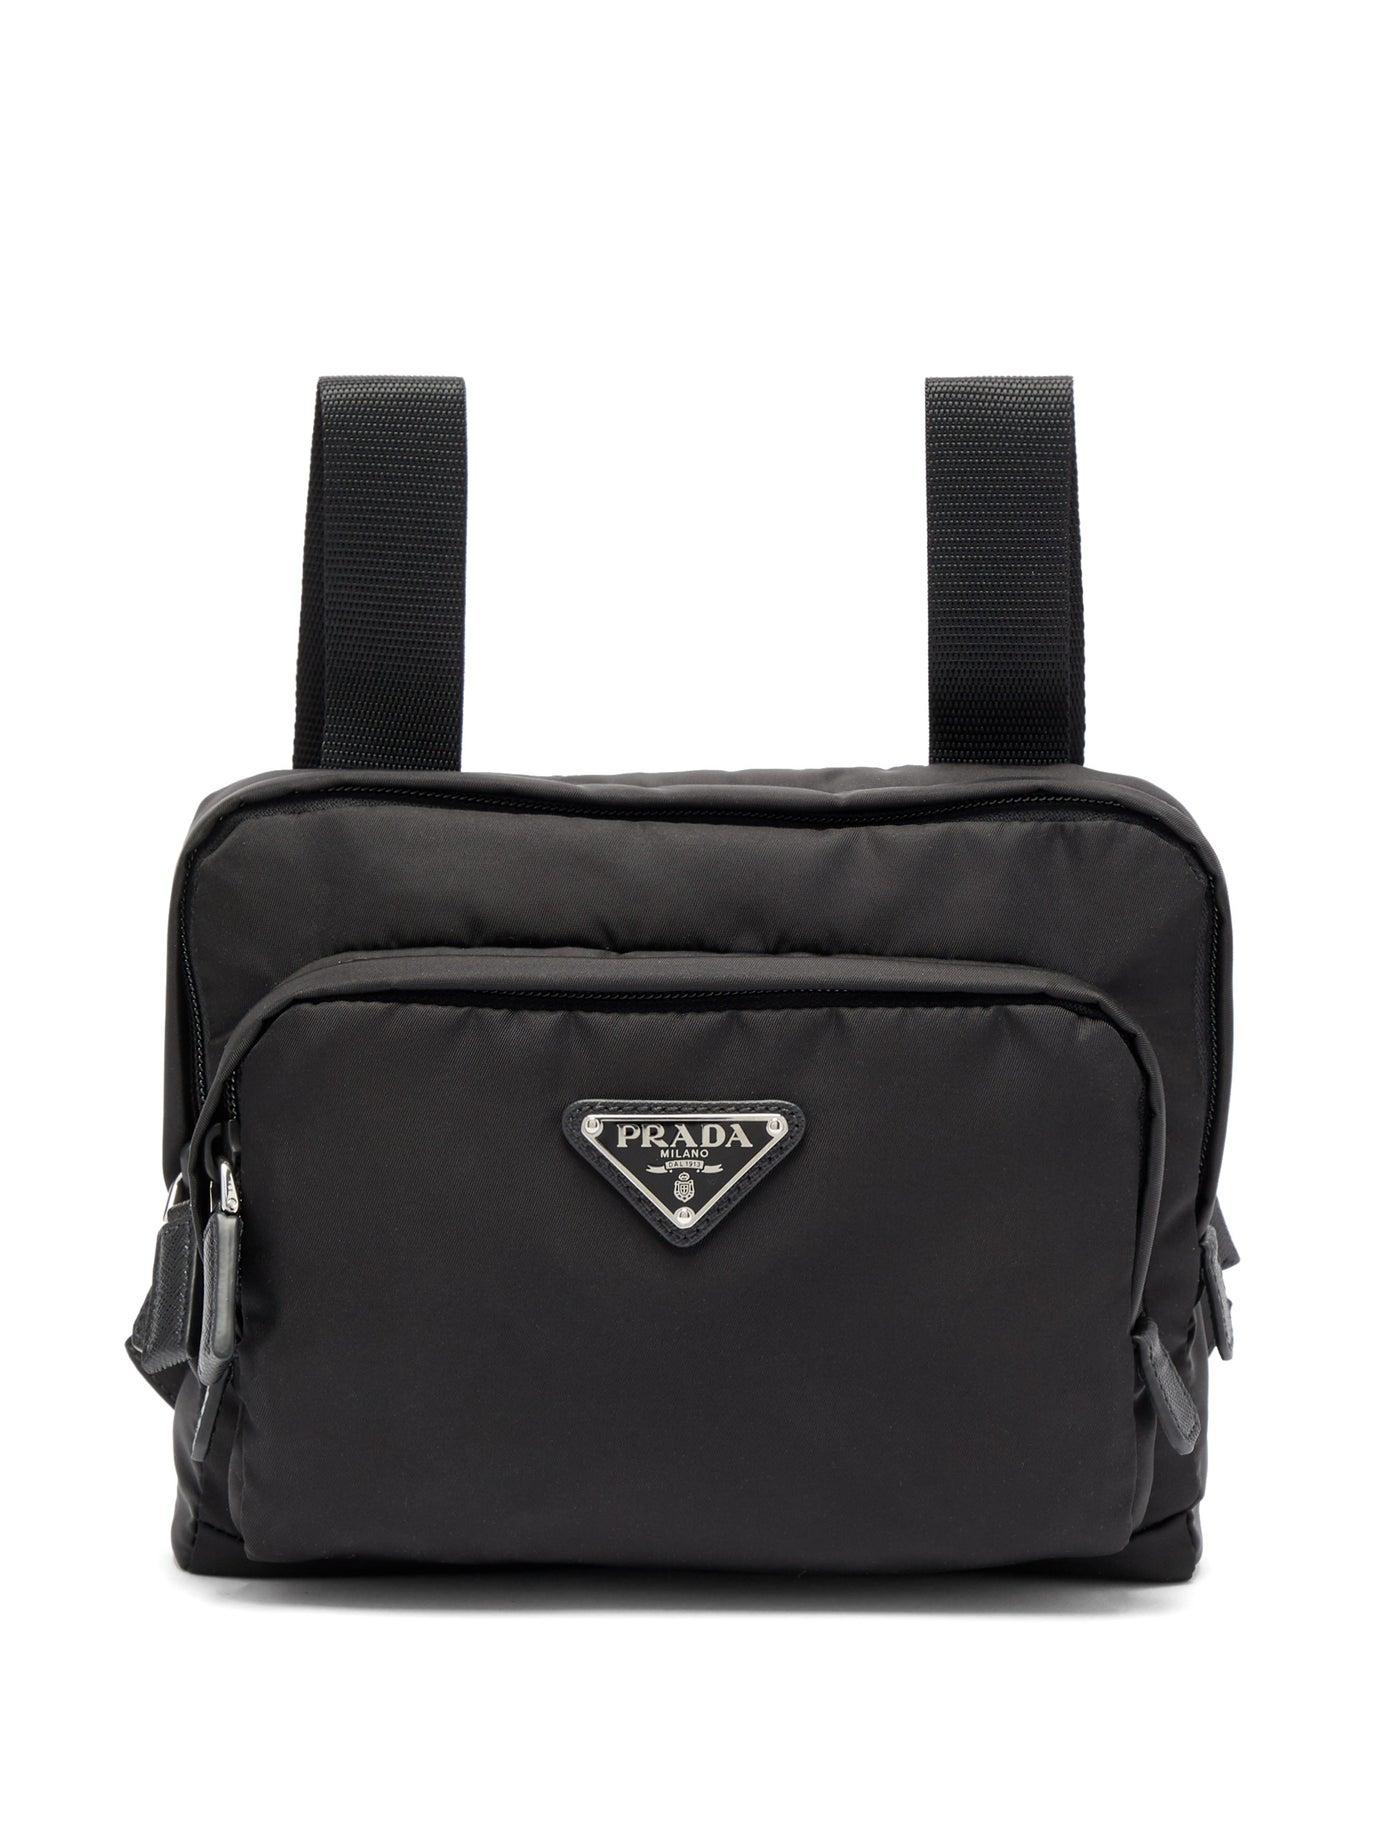 Prada Synthetic Harness Bag in Black for Men - Lyst